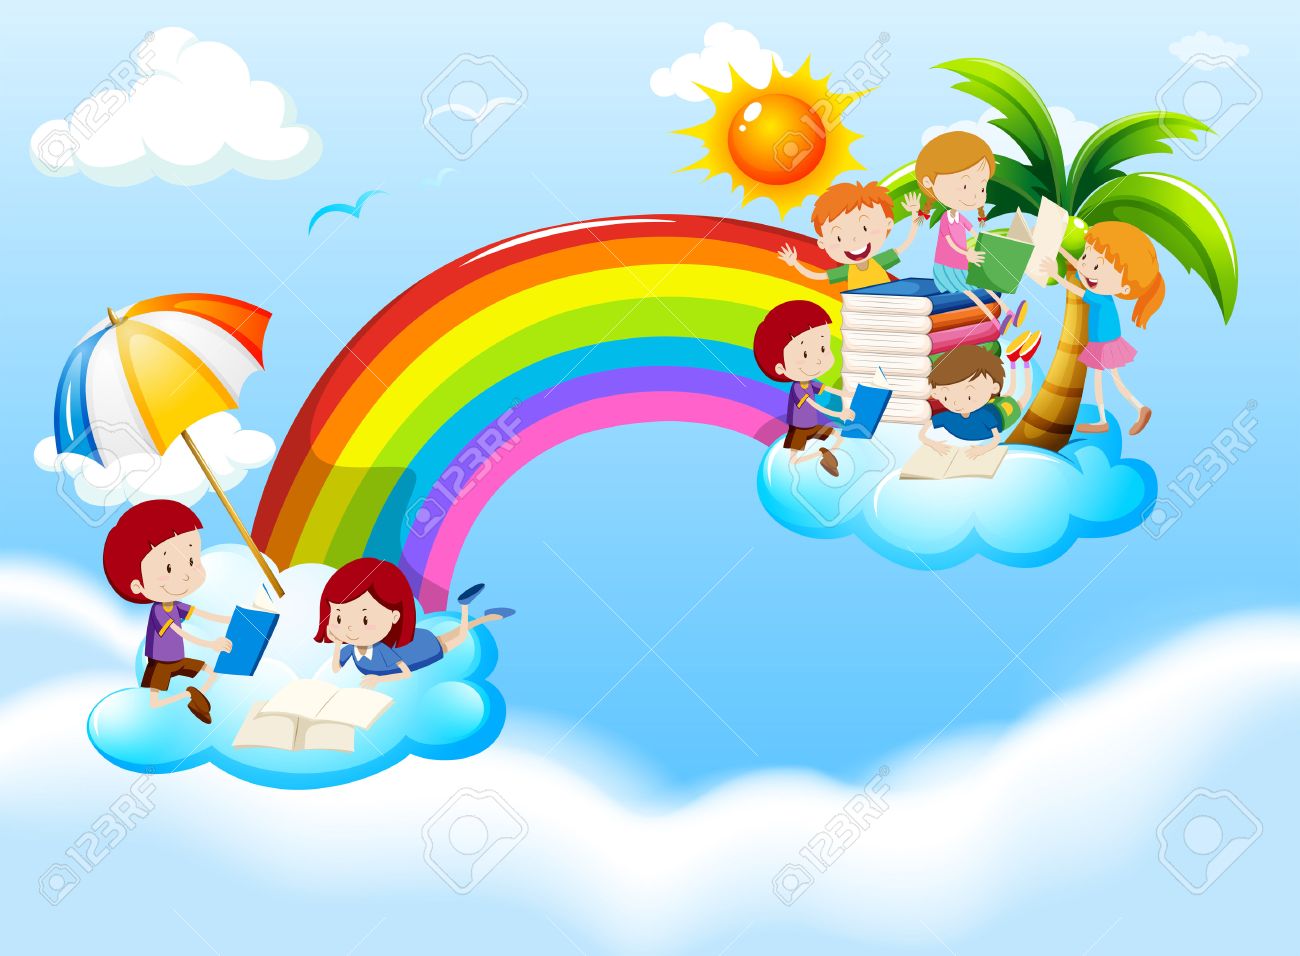 52039101-children-reading-books-over-the-rainbow-illustration-Stock-Photo